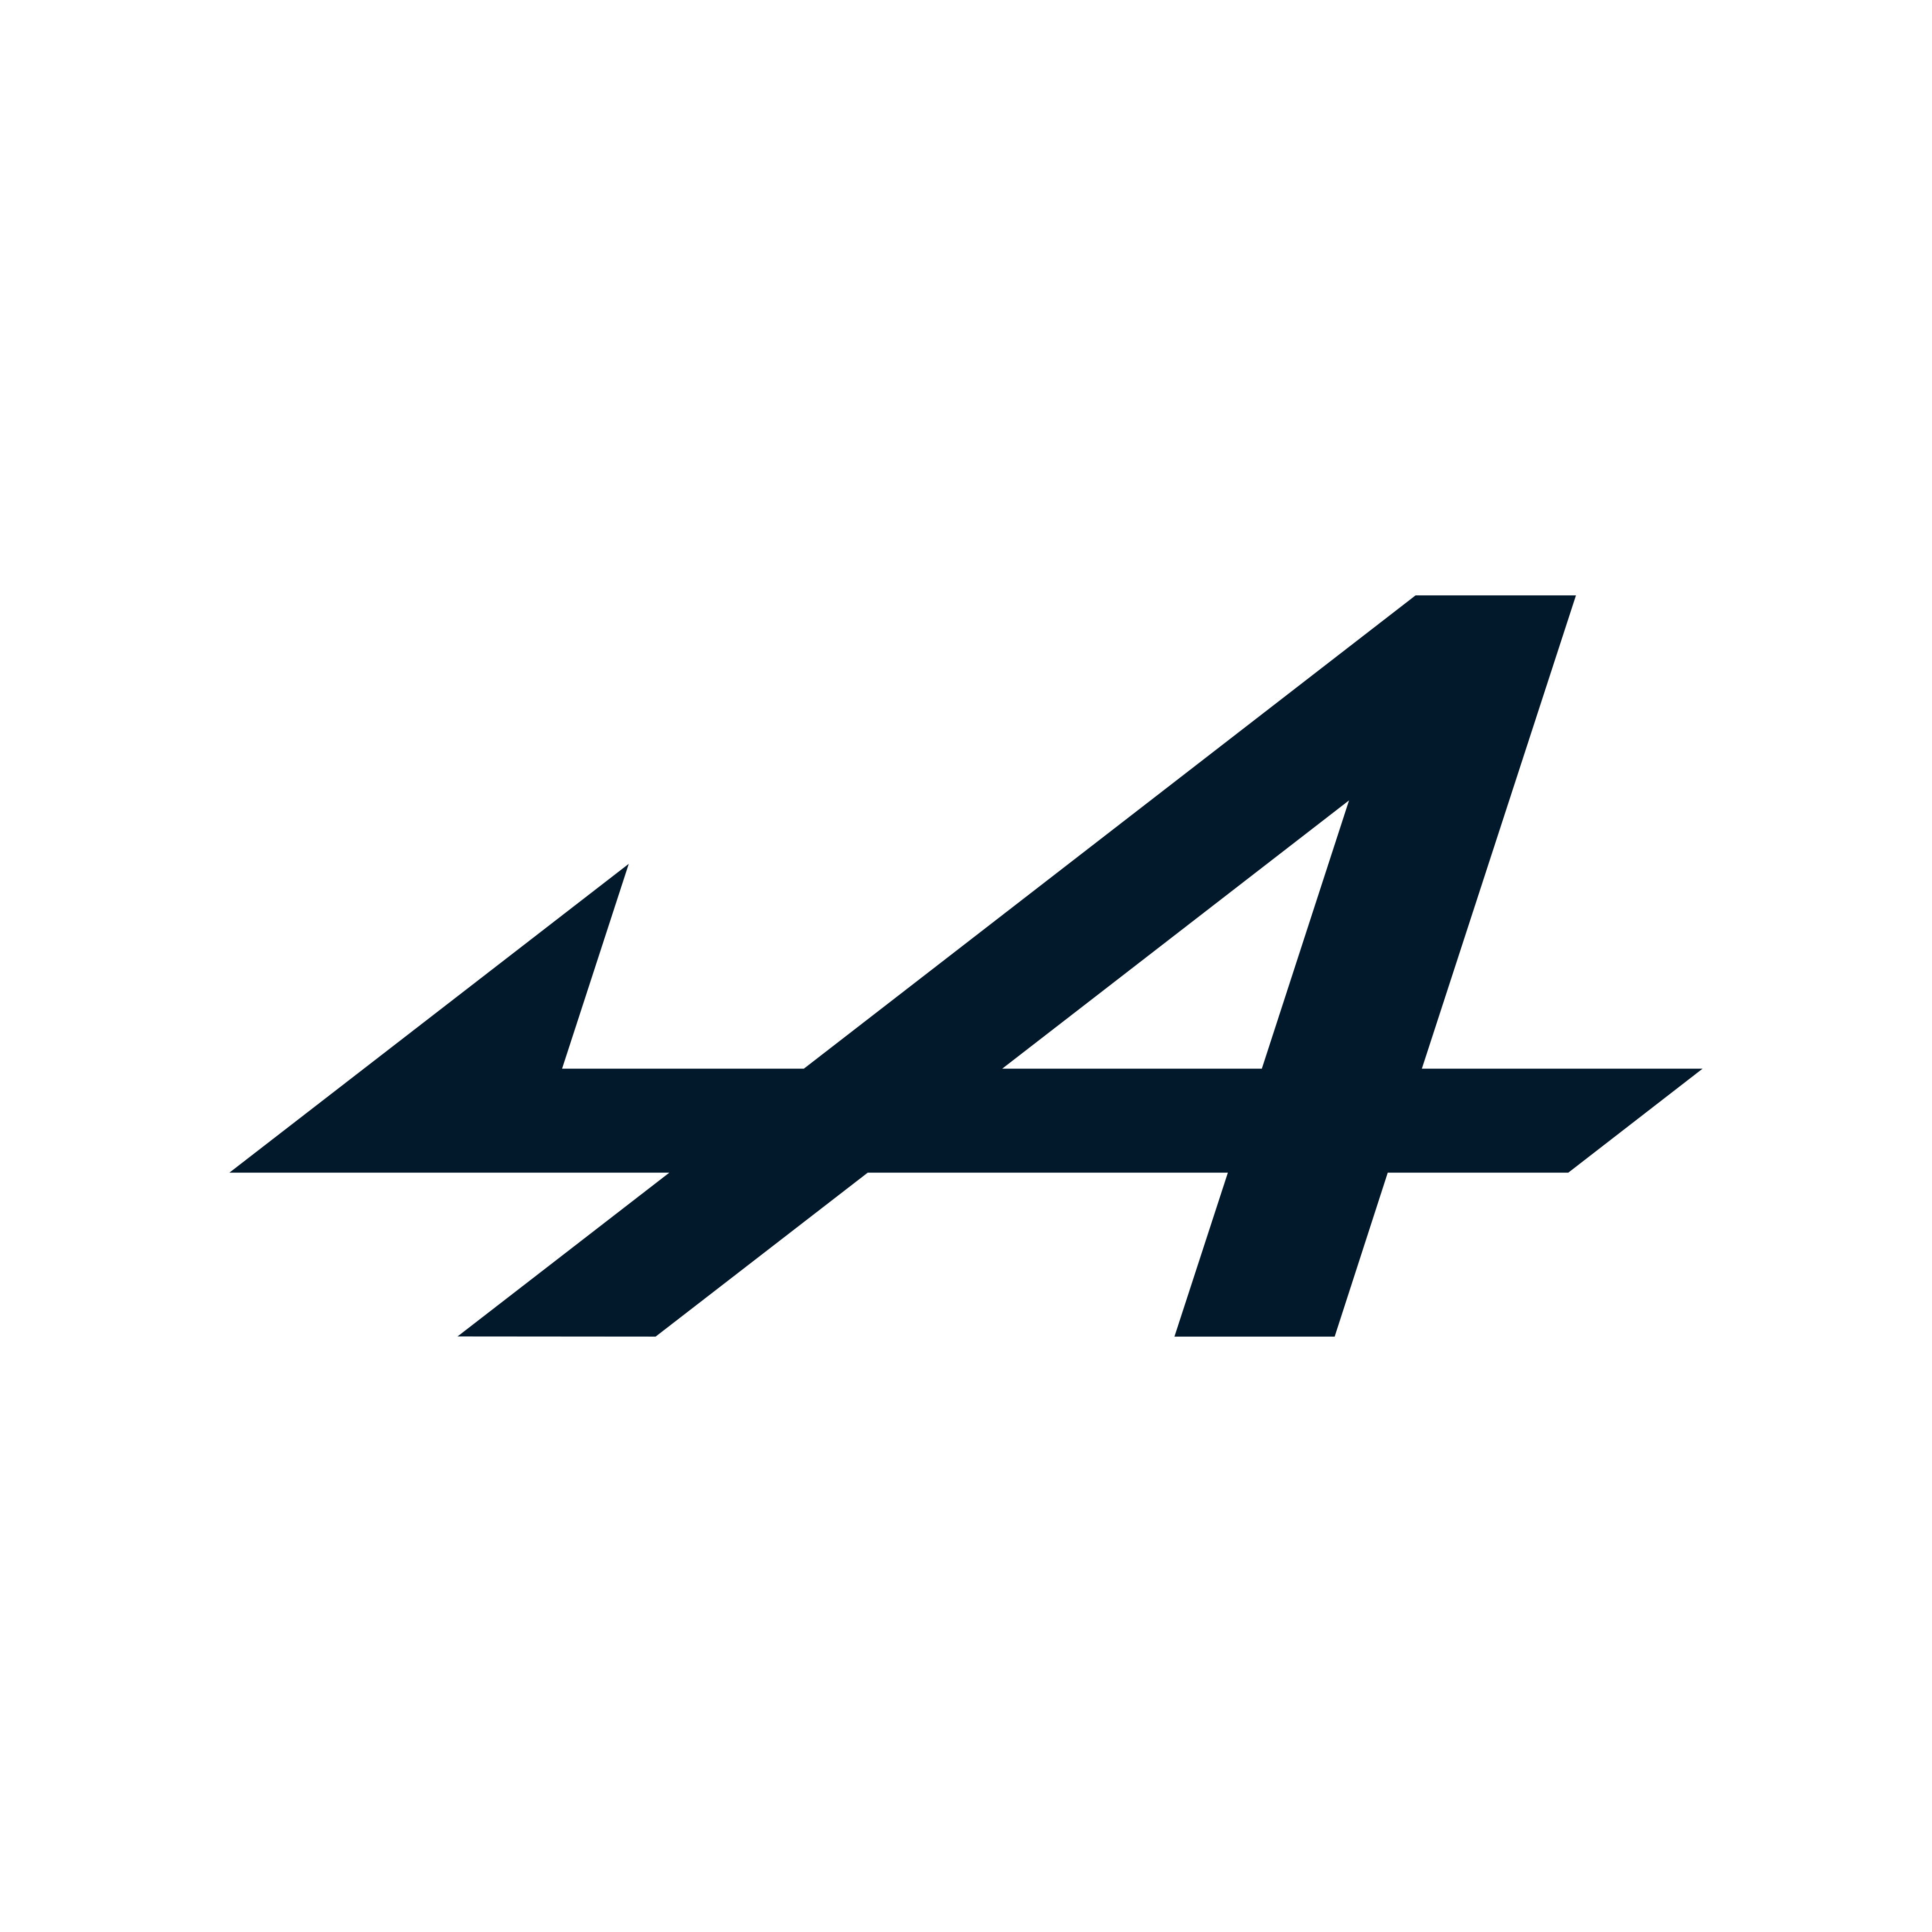 alpine f1 logo 0 - Alpine F1 Team Logo